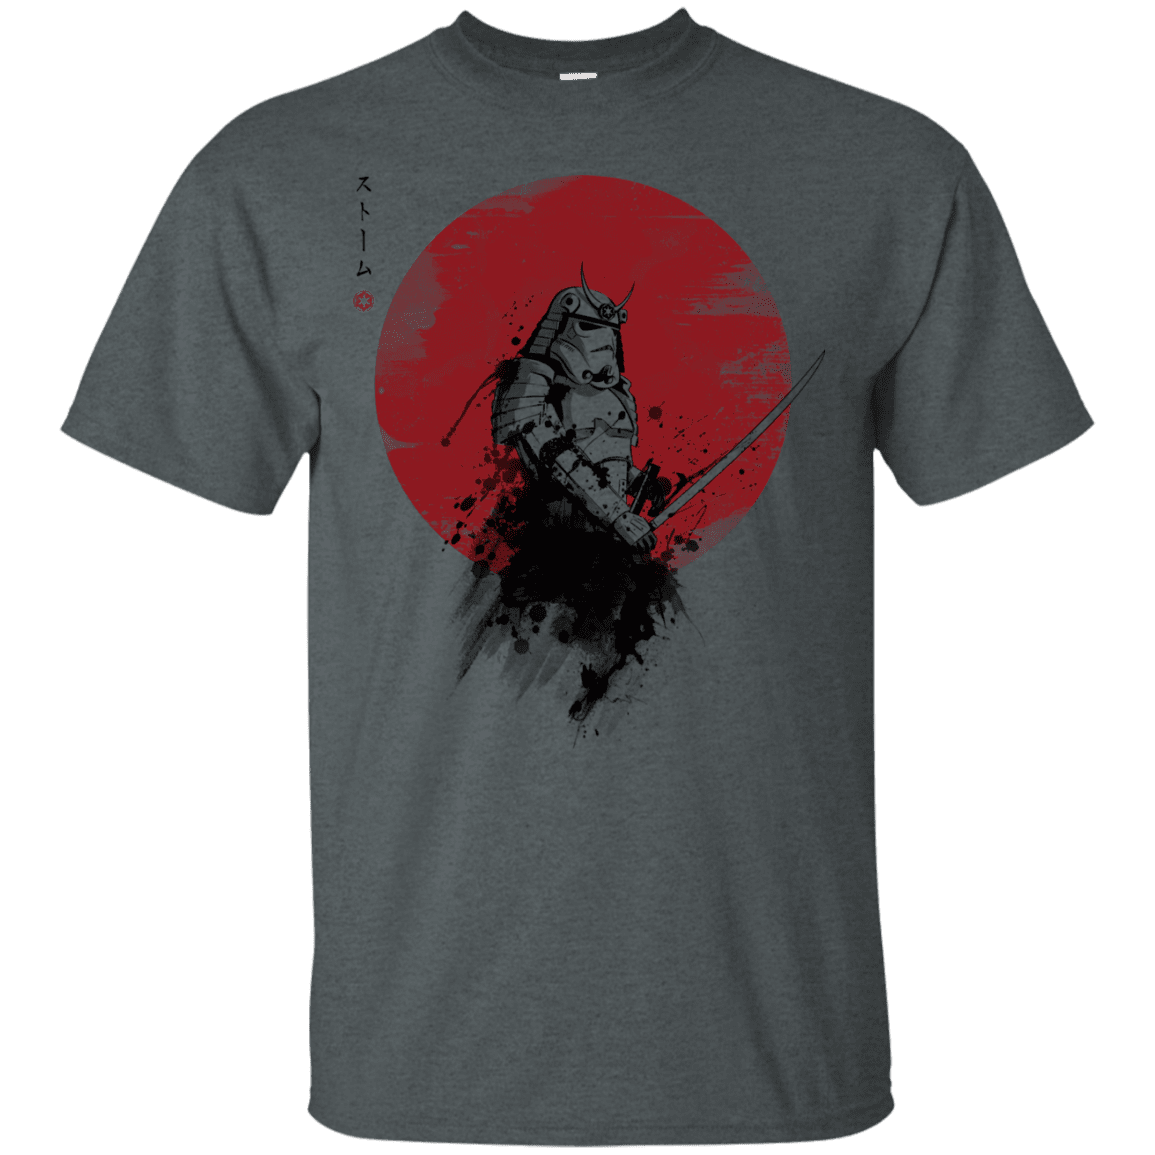 T-Shirts Dark Heather / Small Storm Samurai T-Shirt